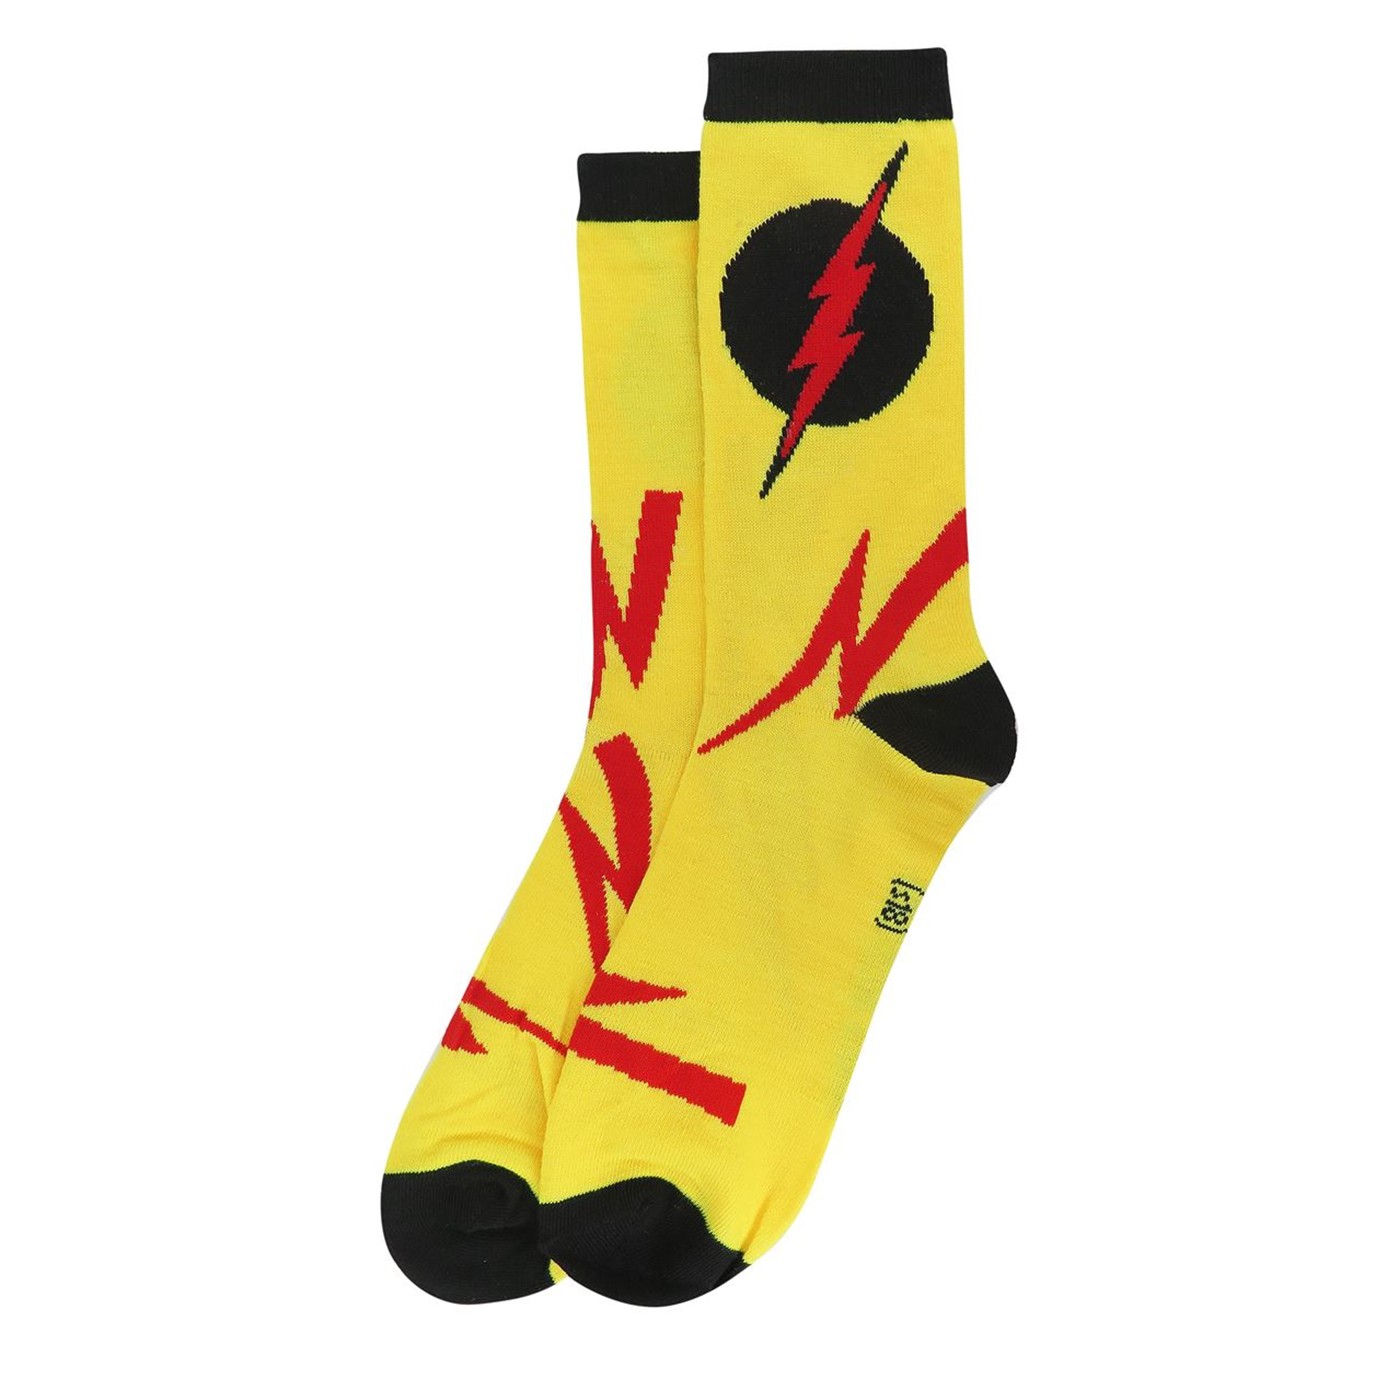 The Flash Good Vs Evil Socks 2-Pack